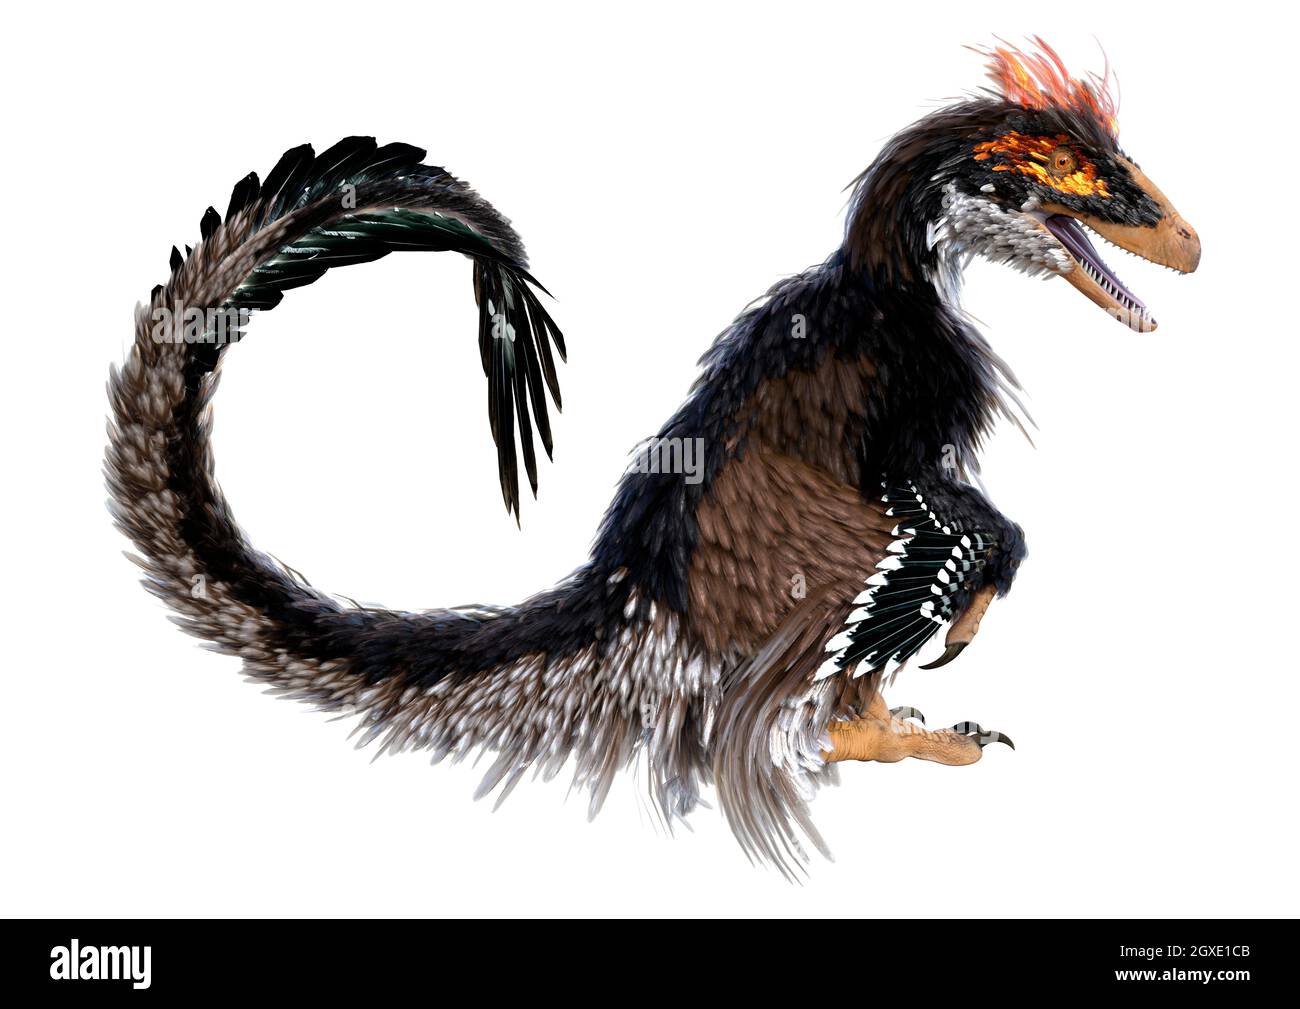 Deinonychus dinosaur, illustration Stock Photo - Alamy